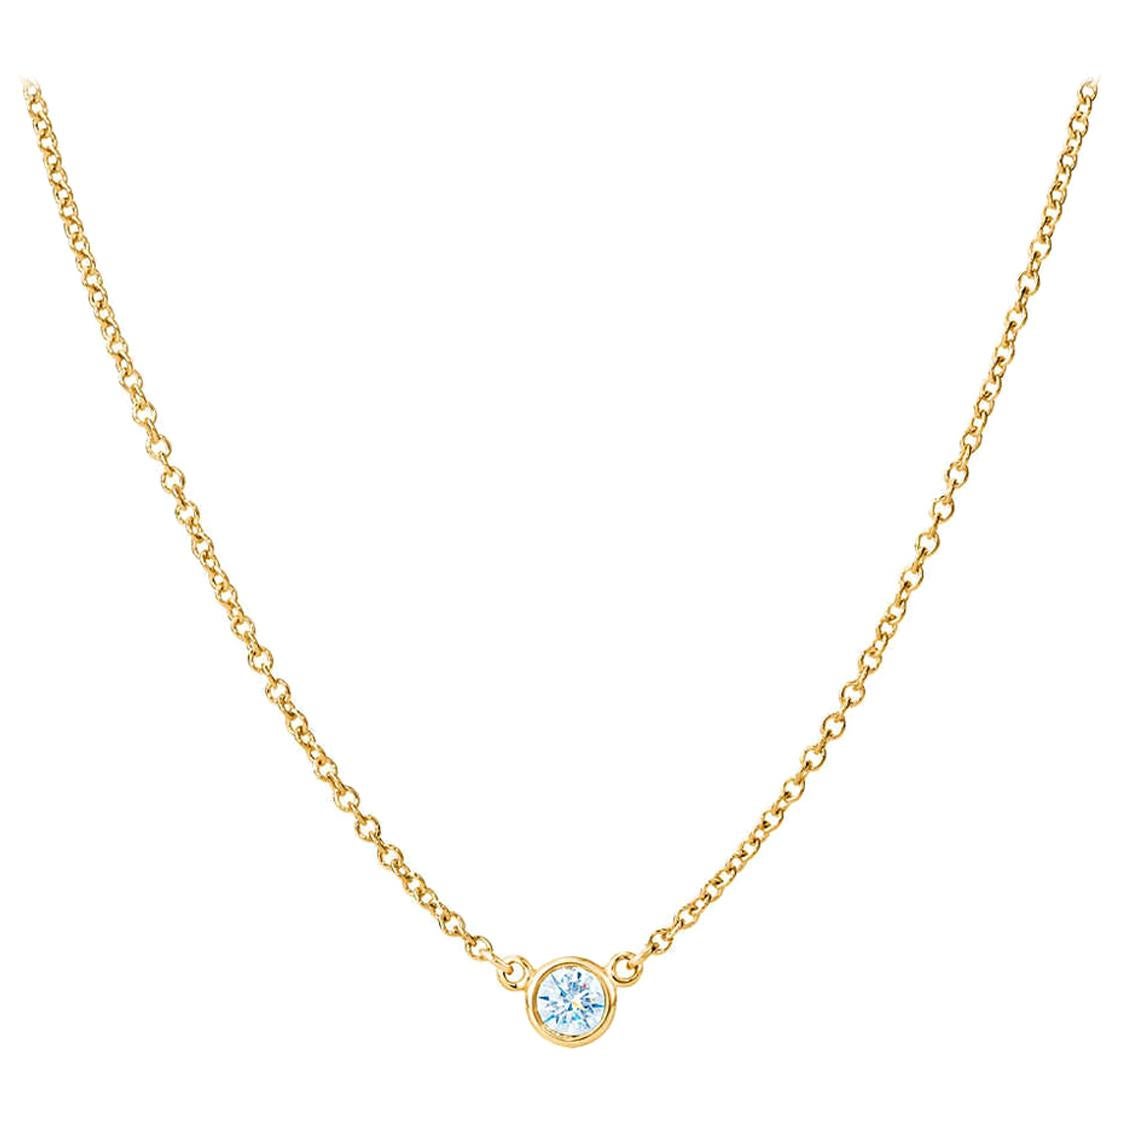 Suzy Levian 14 Karat Gold 0.15 Carat Round White Diamond Solitaire Necklace